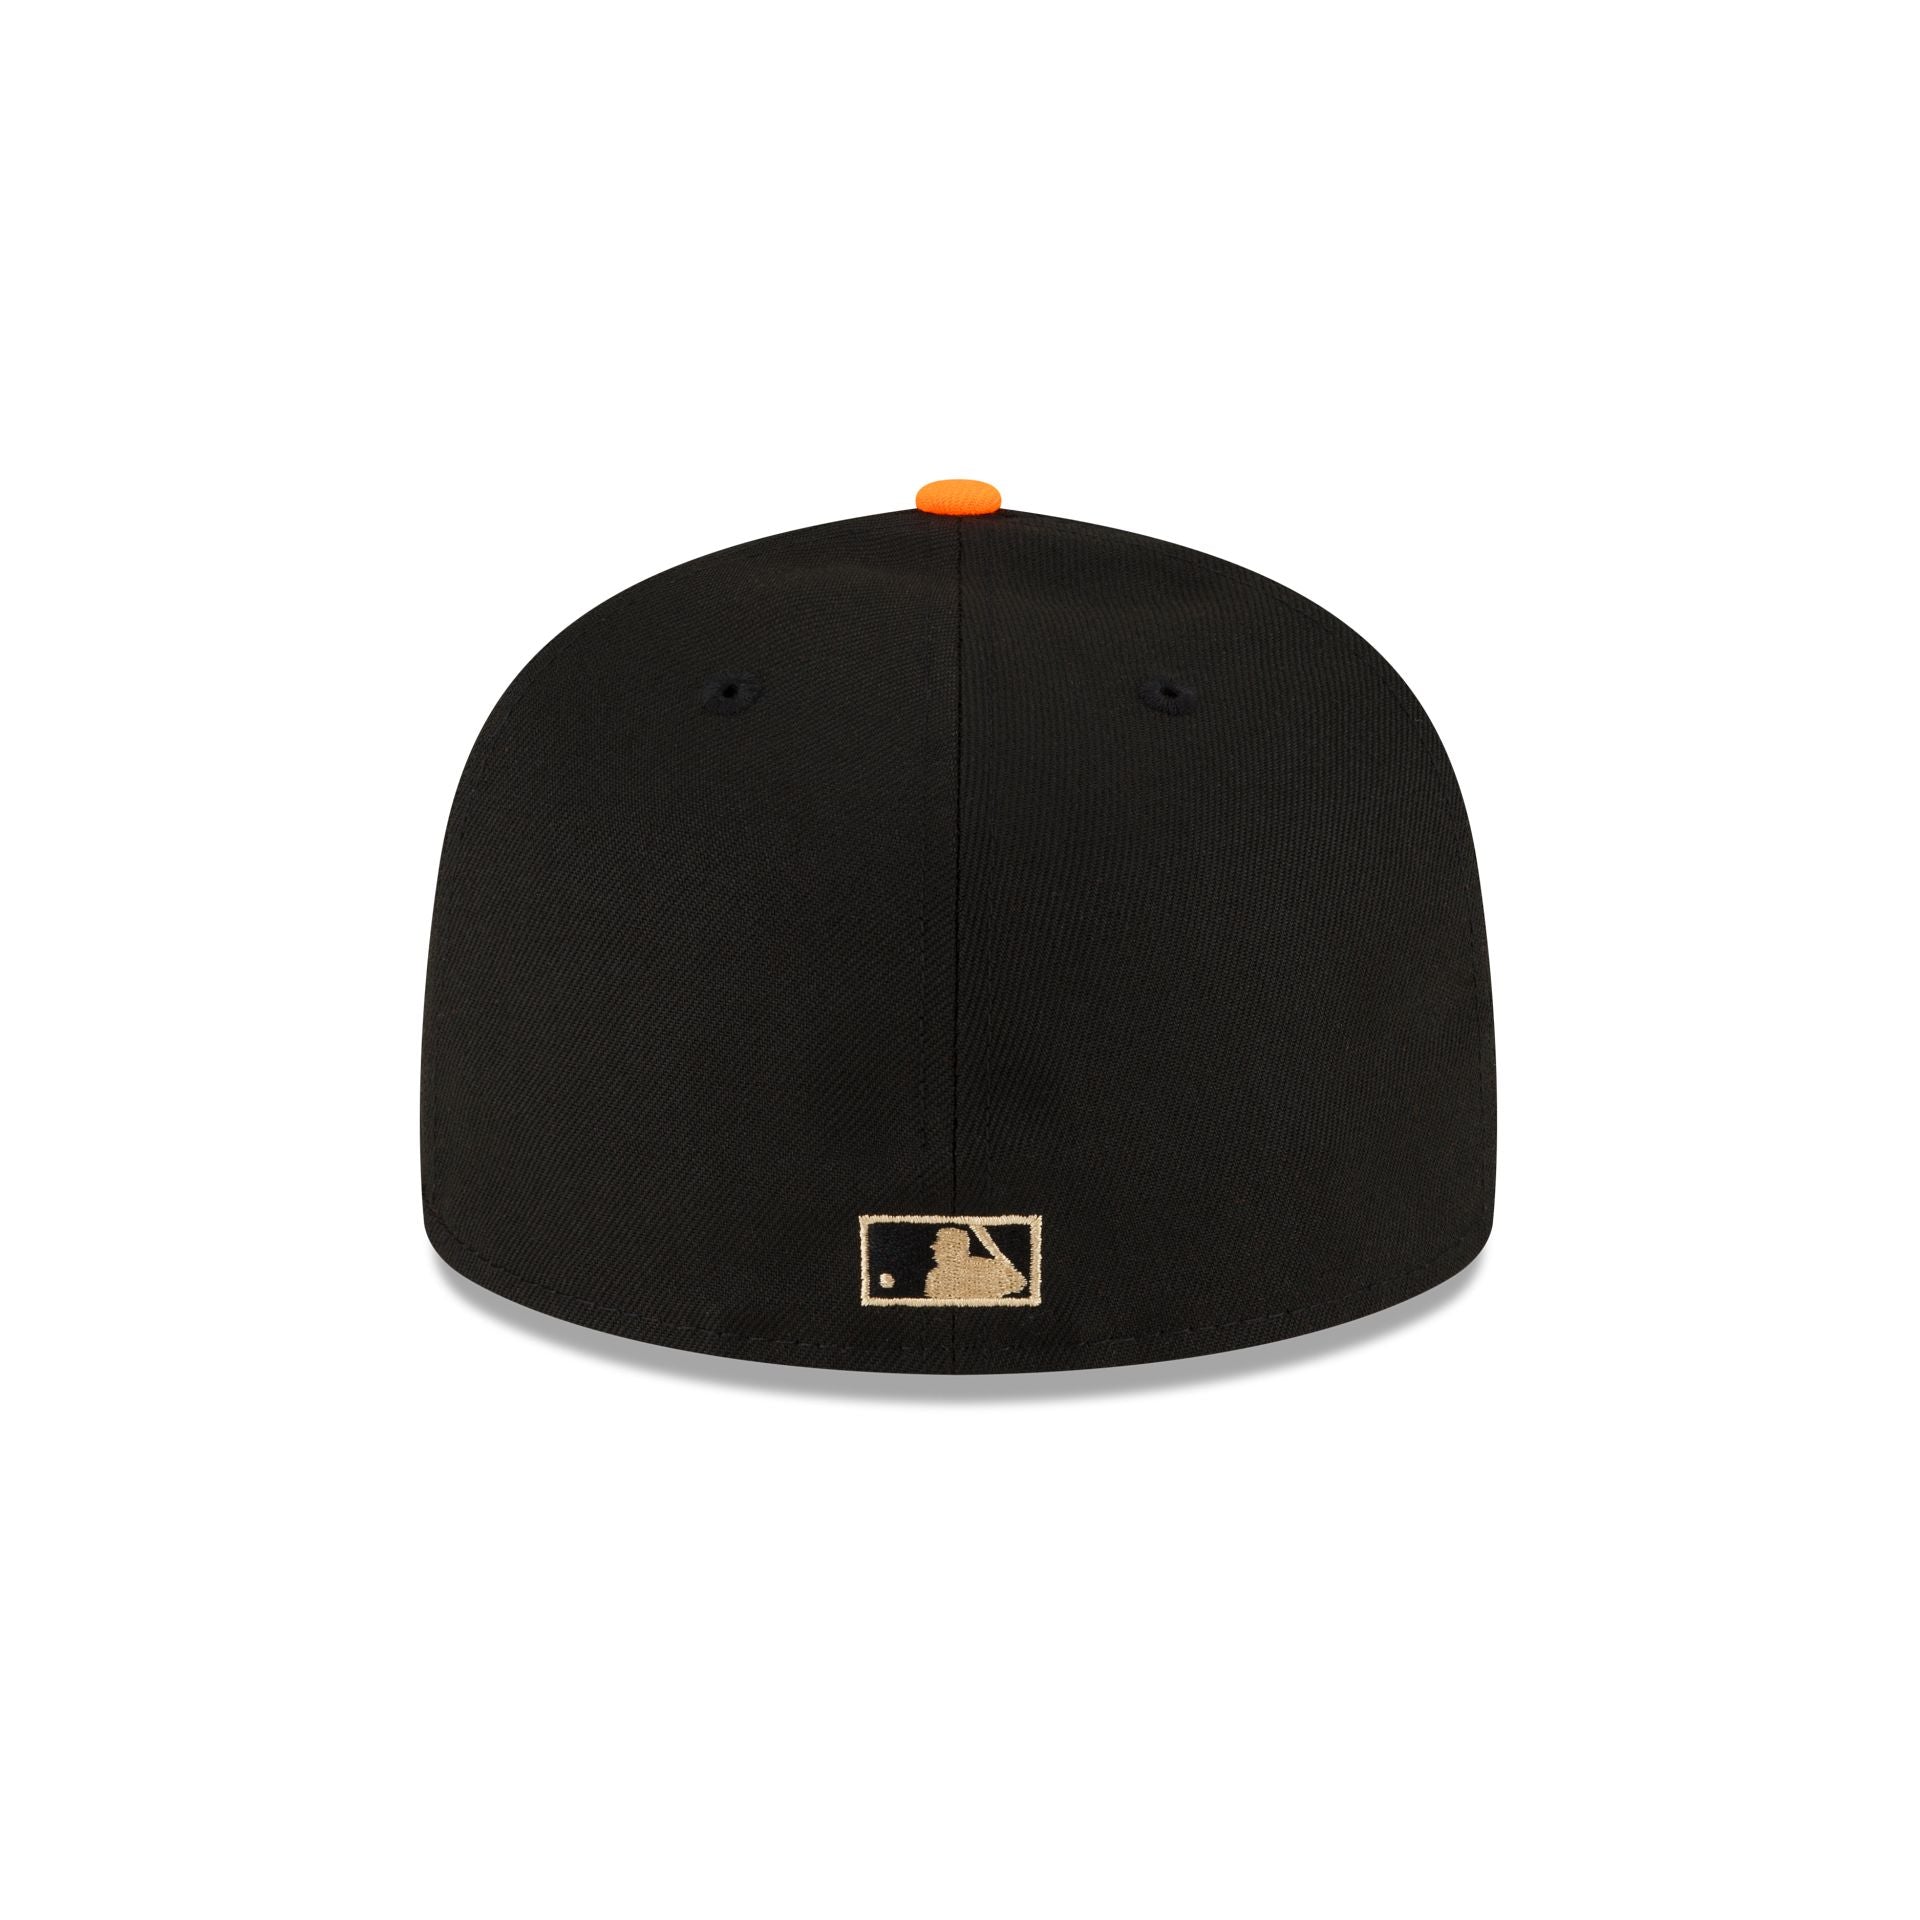 Just Caps Orange Visor New York Yankees 59FIFTY Fitted Hat – New Era Cap